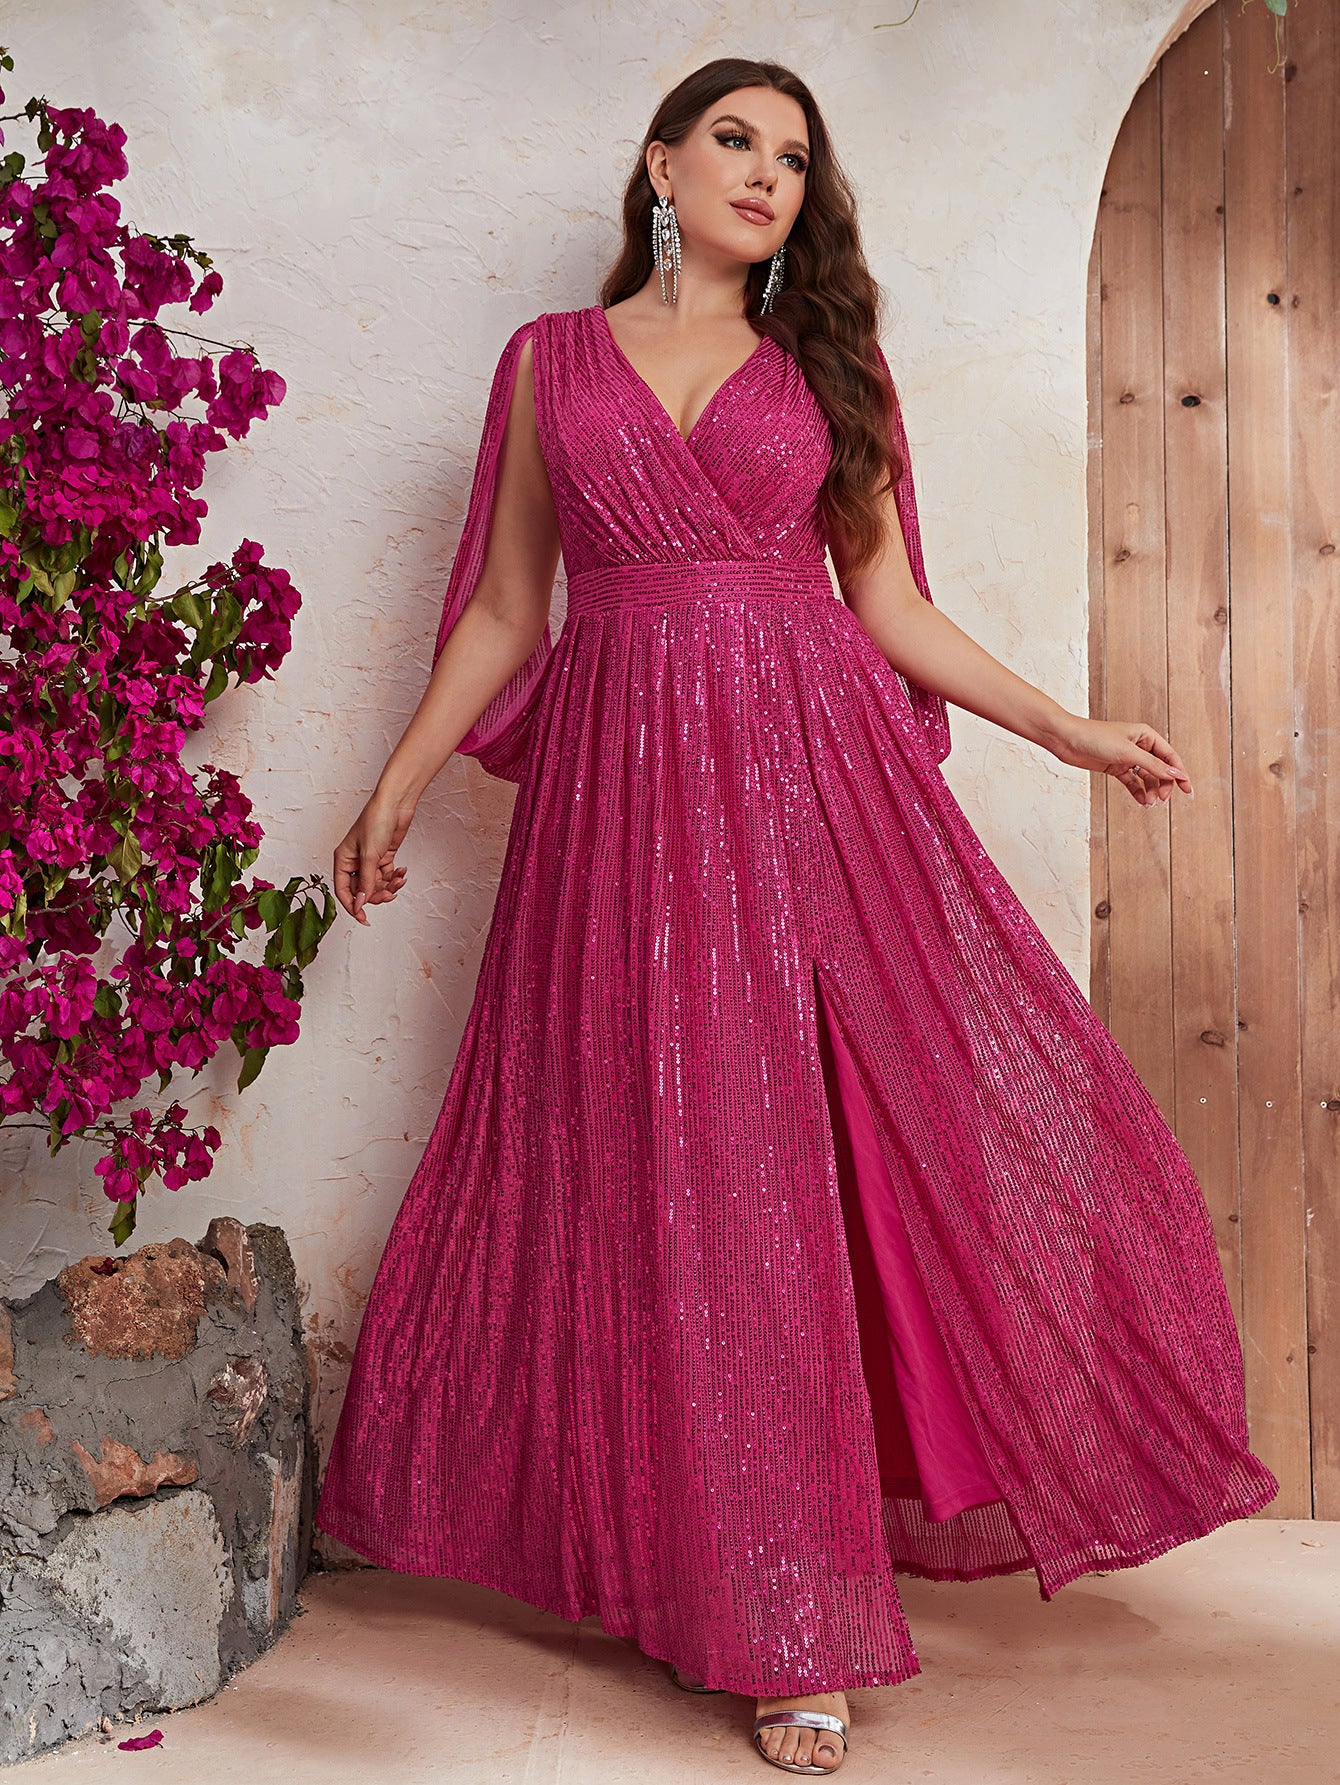 Plus Size Rose Red Dress Sequin V neck Cocktail Light Luxury Evening Maxi Dress